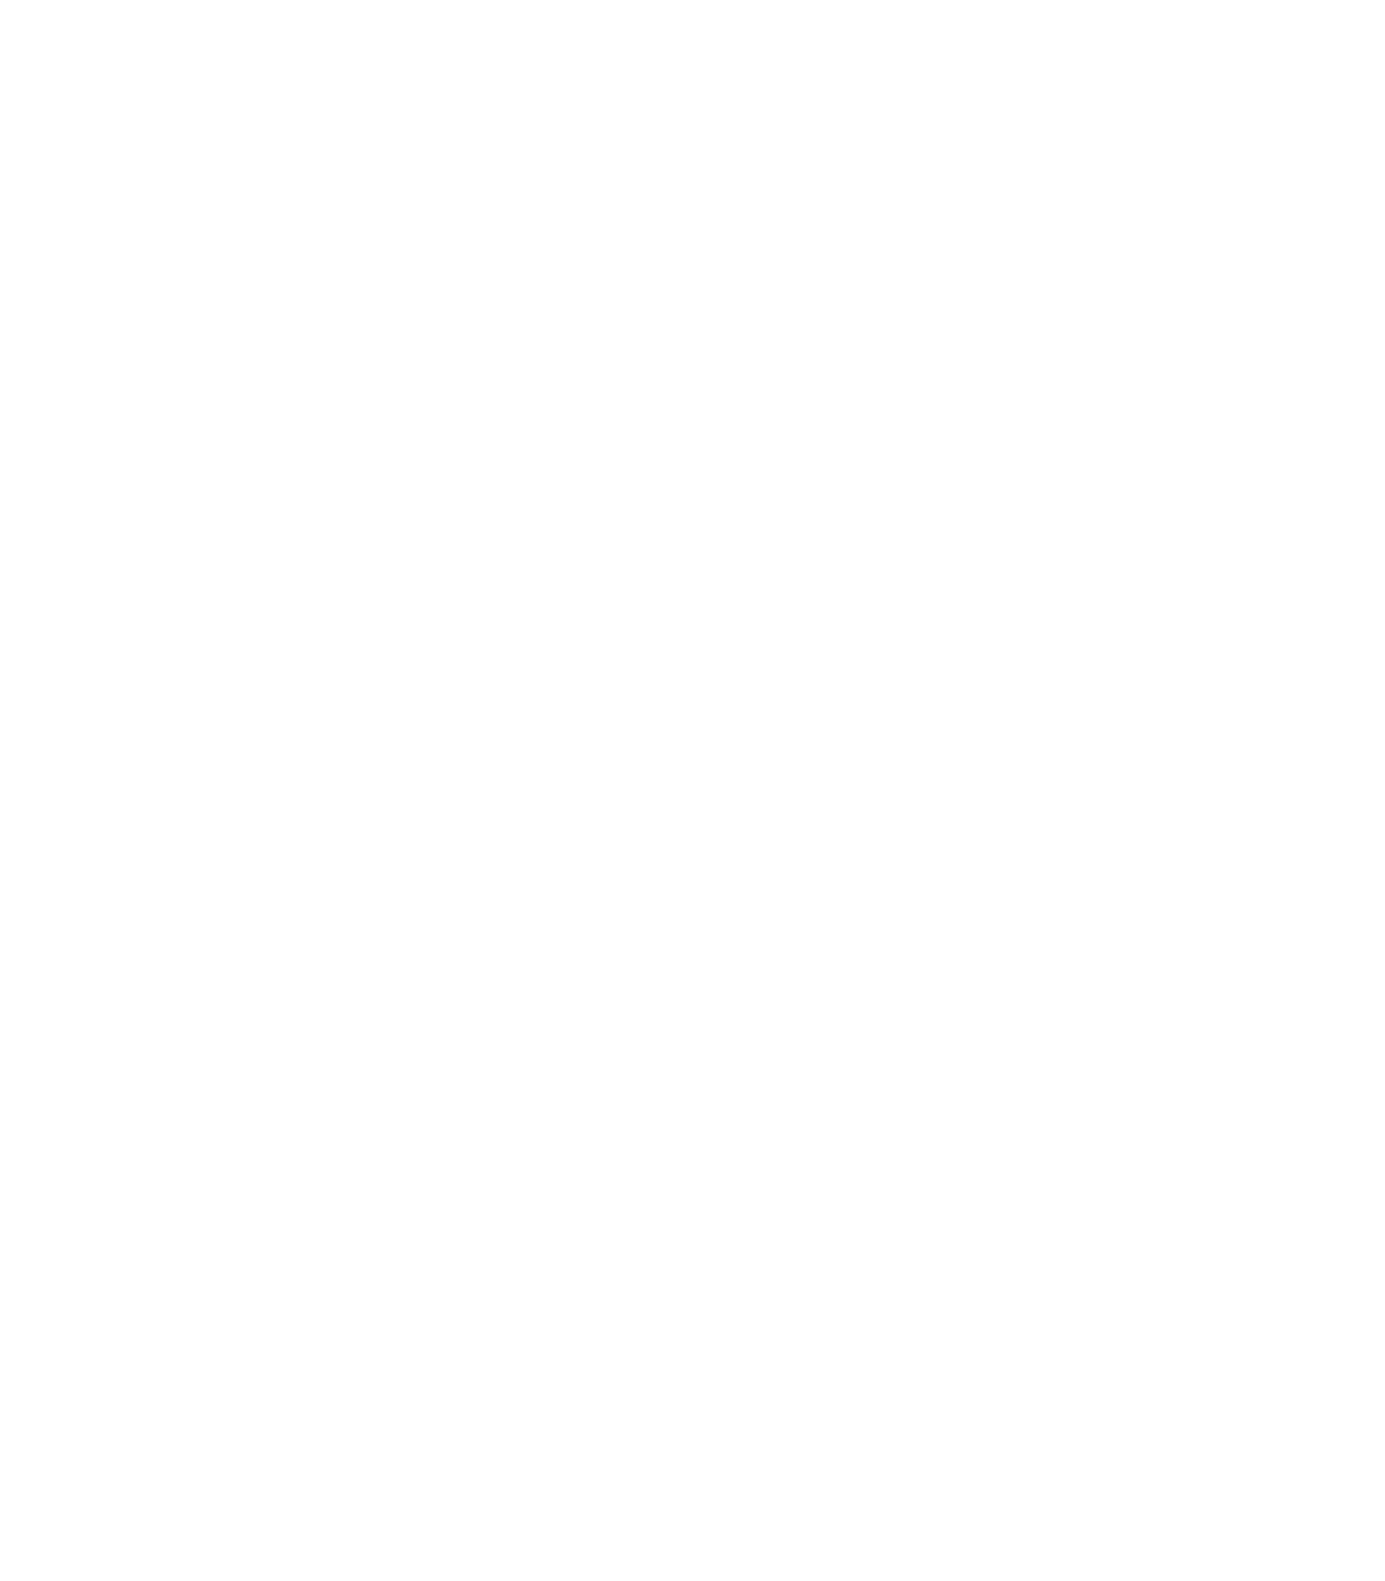 Douglas Emmett logo for dark backgrounds (transparent PNG)